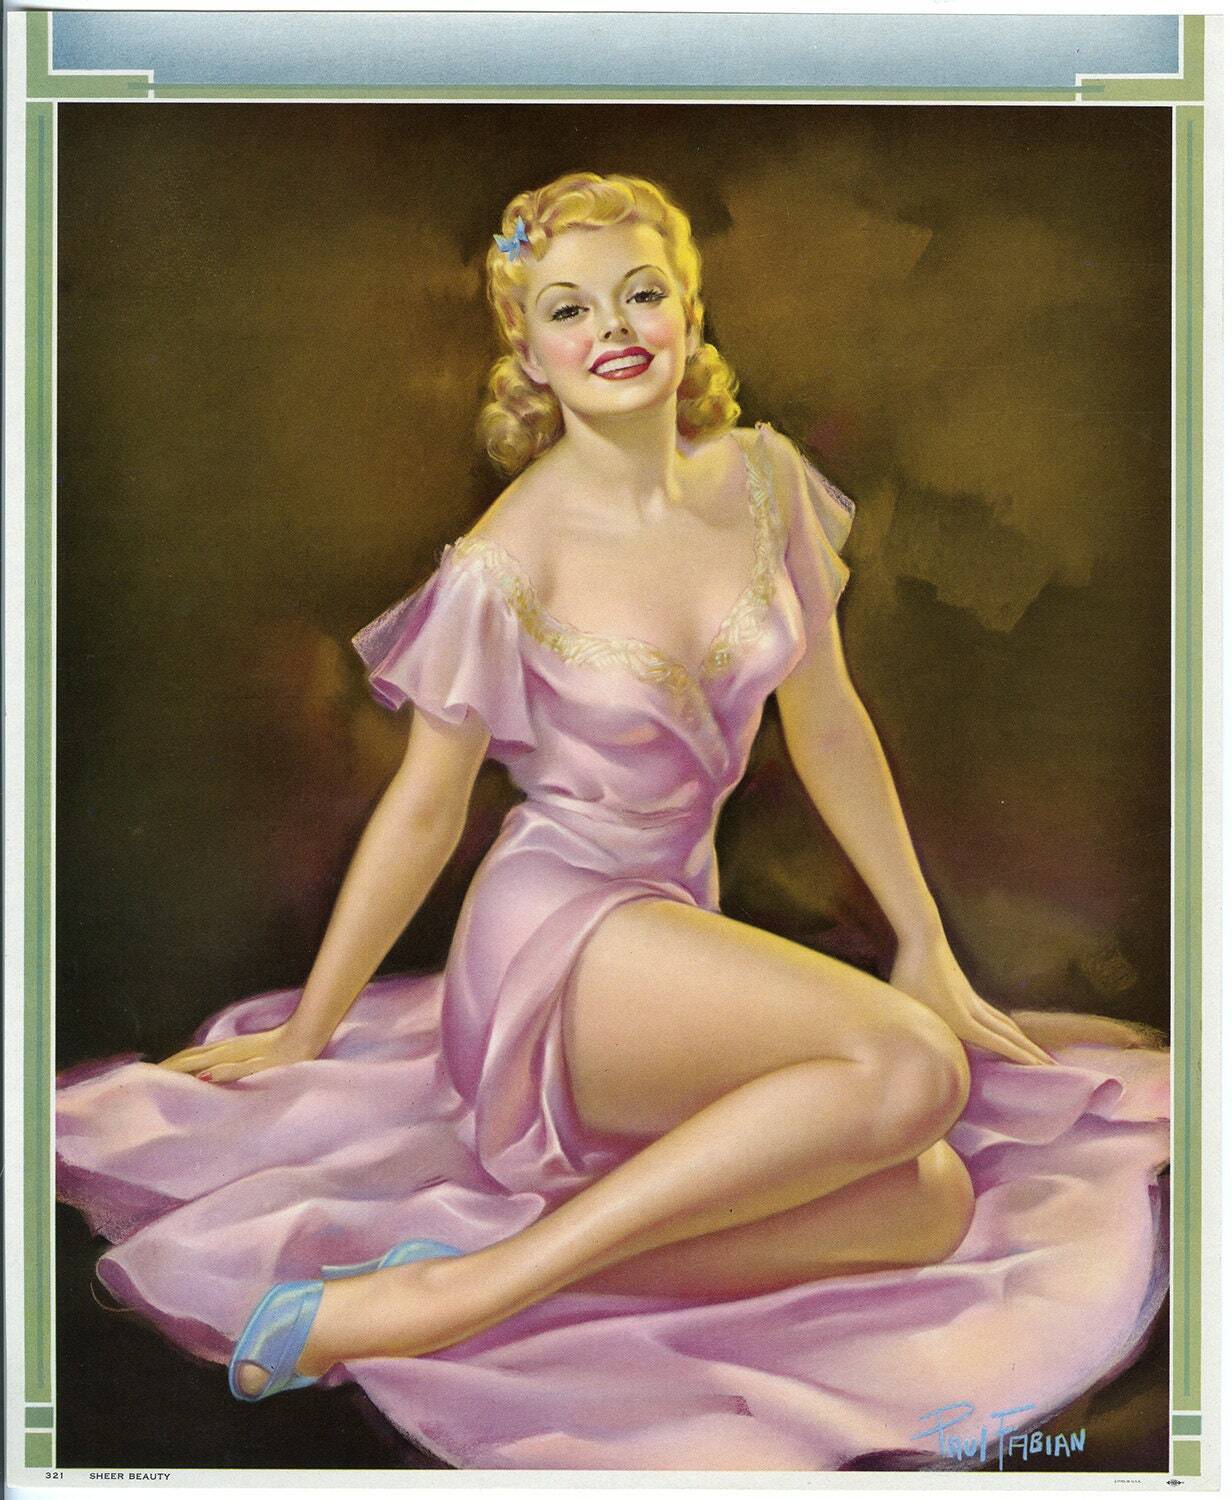 Vintage Pearl Frush 1940s Art Deco Pin-Up Poster Leggy Blonde Sheer Beauty